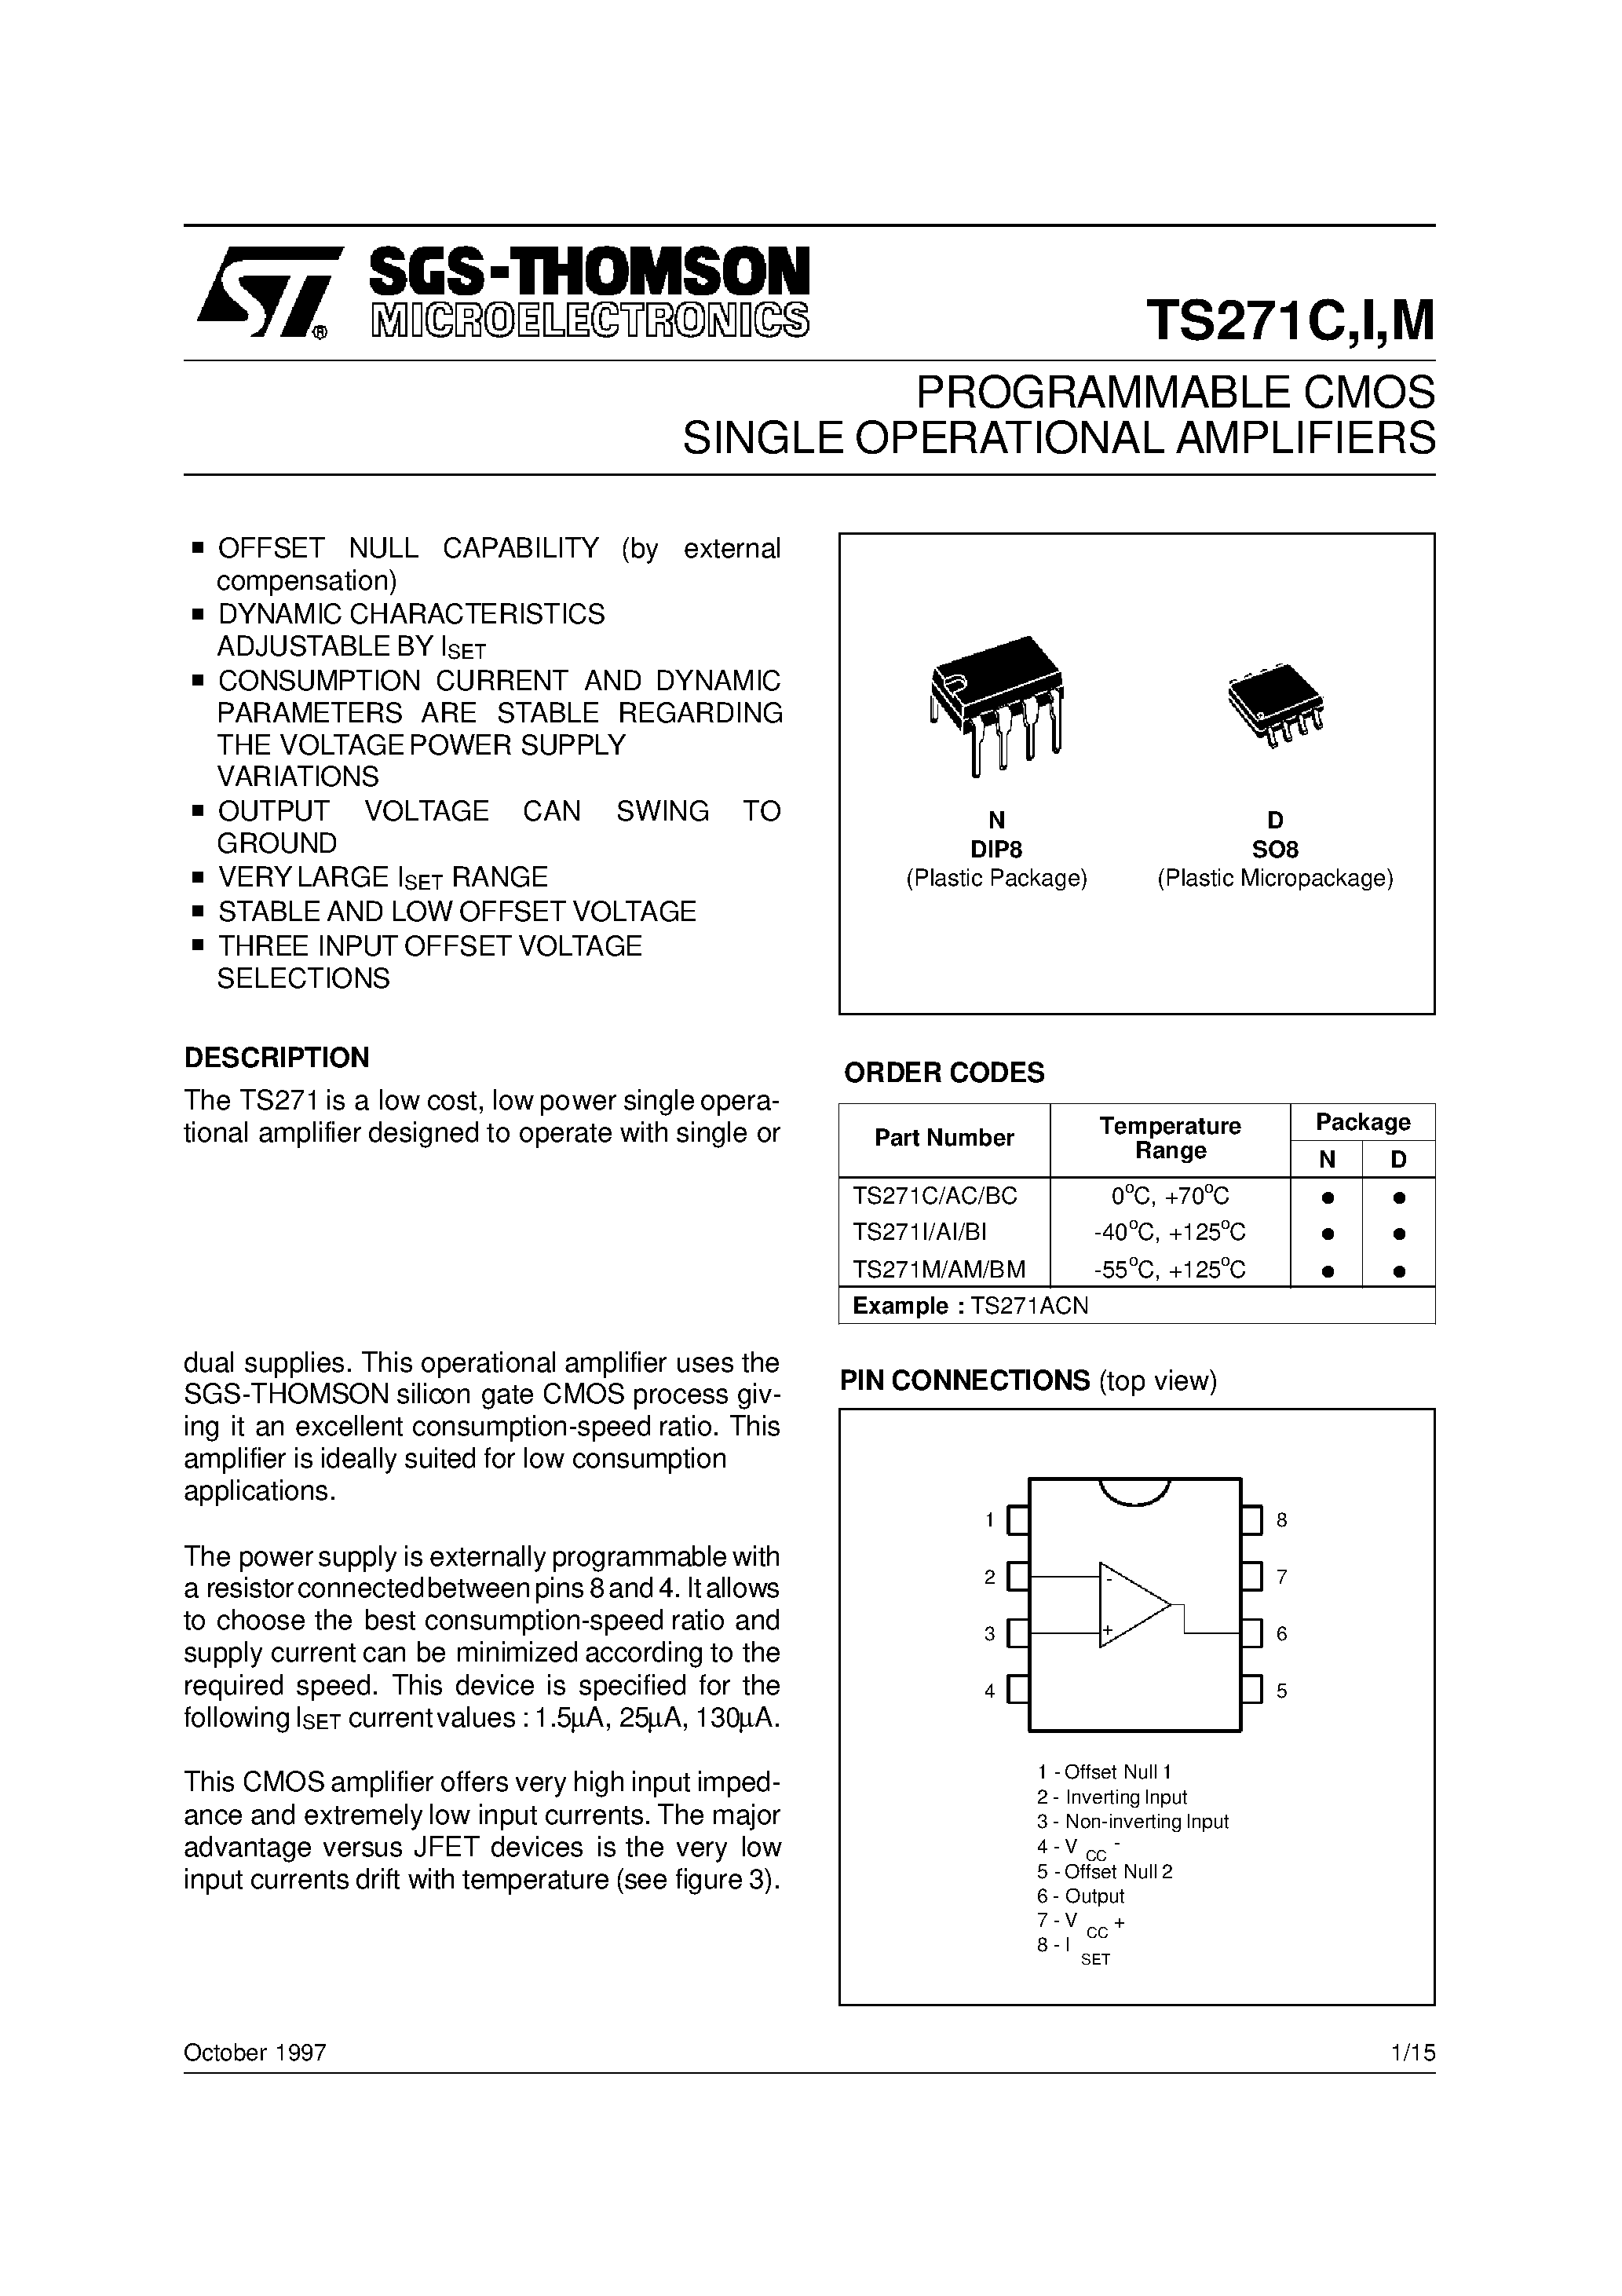 Даташит TS271AM - PROGRAMMABLE CMOS SINGLE OPERATIONAL AMPLIFIERS страница 1